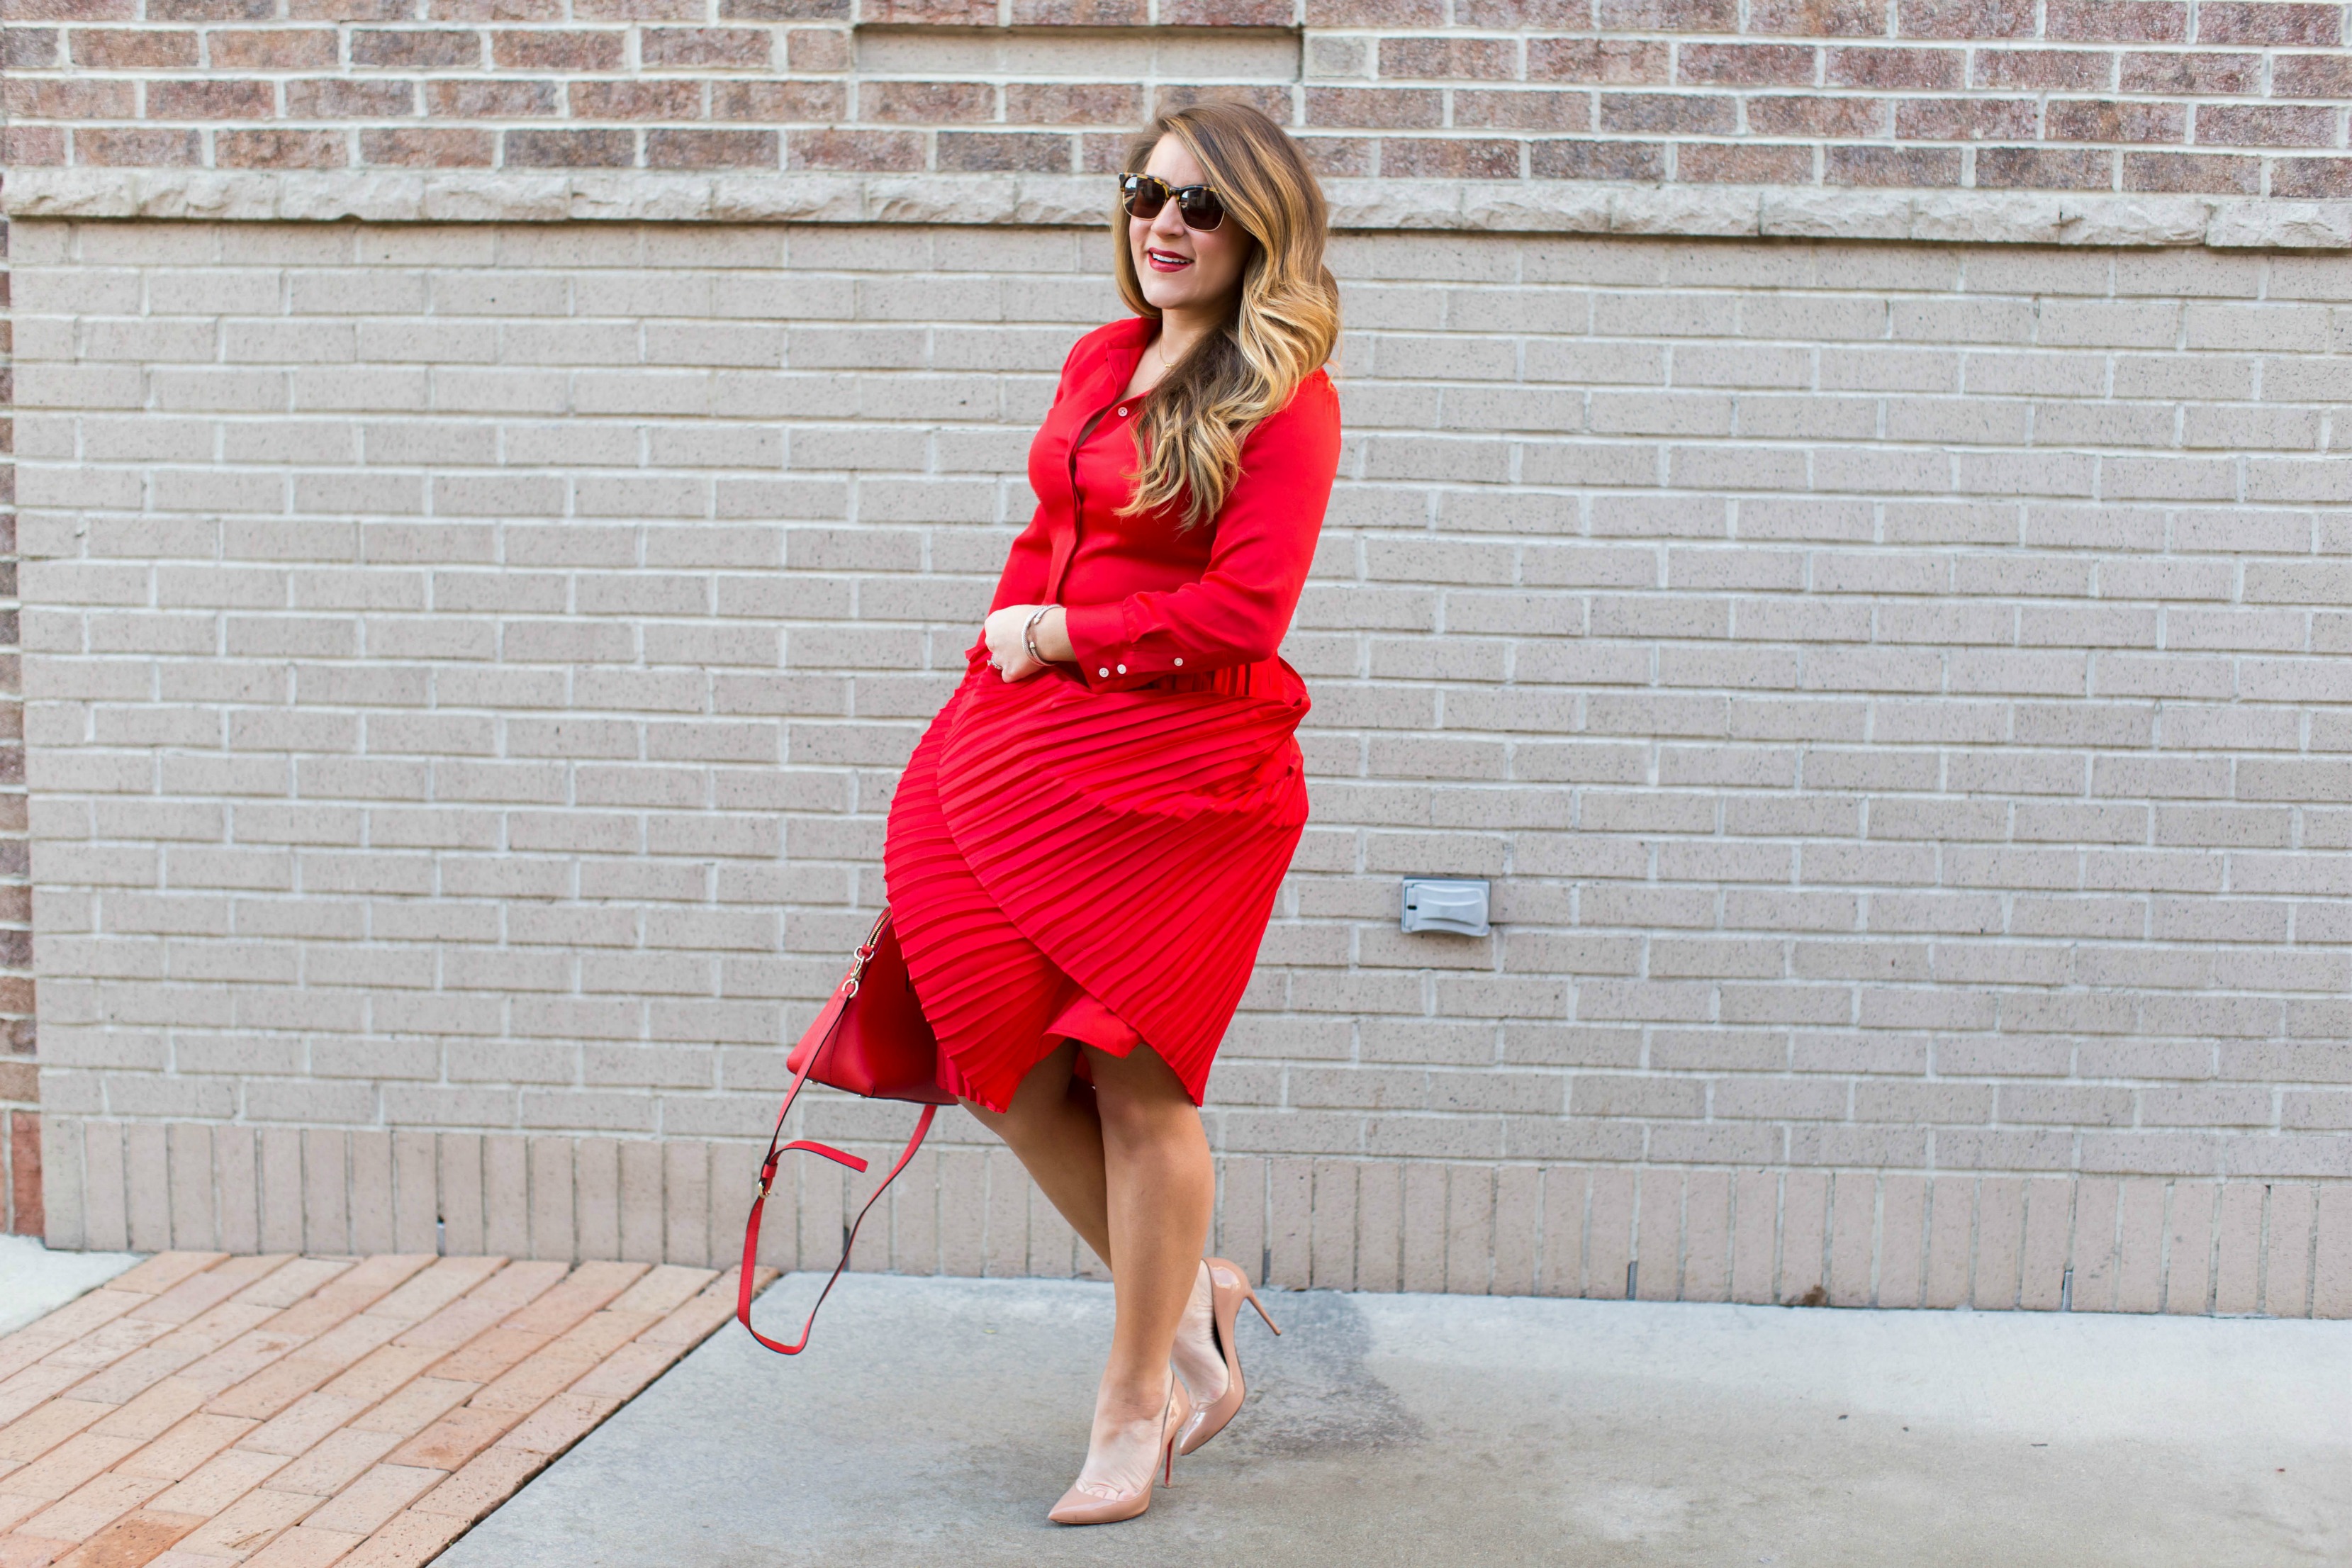 Versatile Red Dress for Errands or the Office | coffeebeansandbobbypins.com